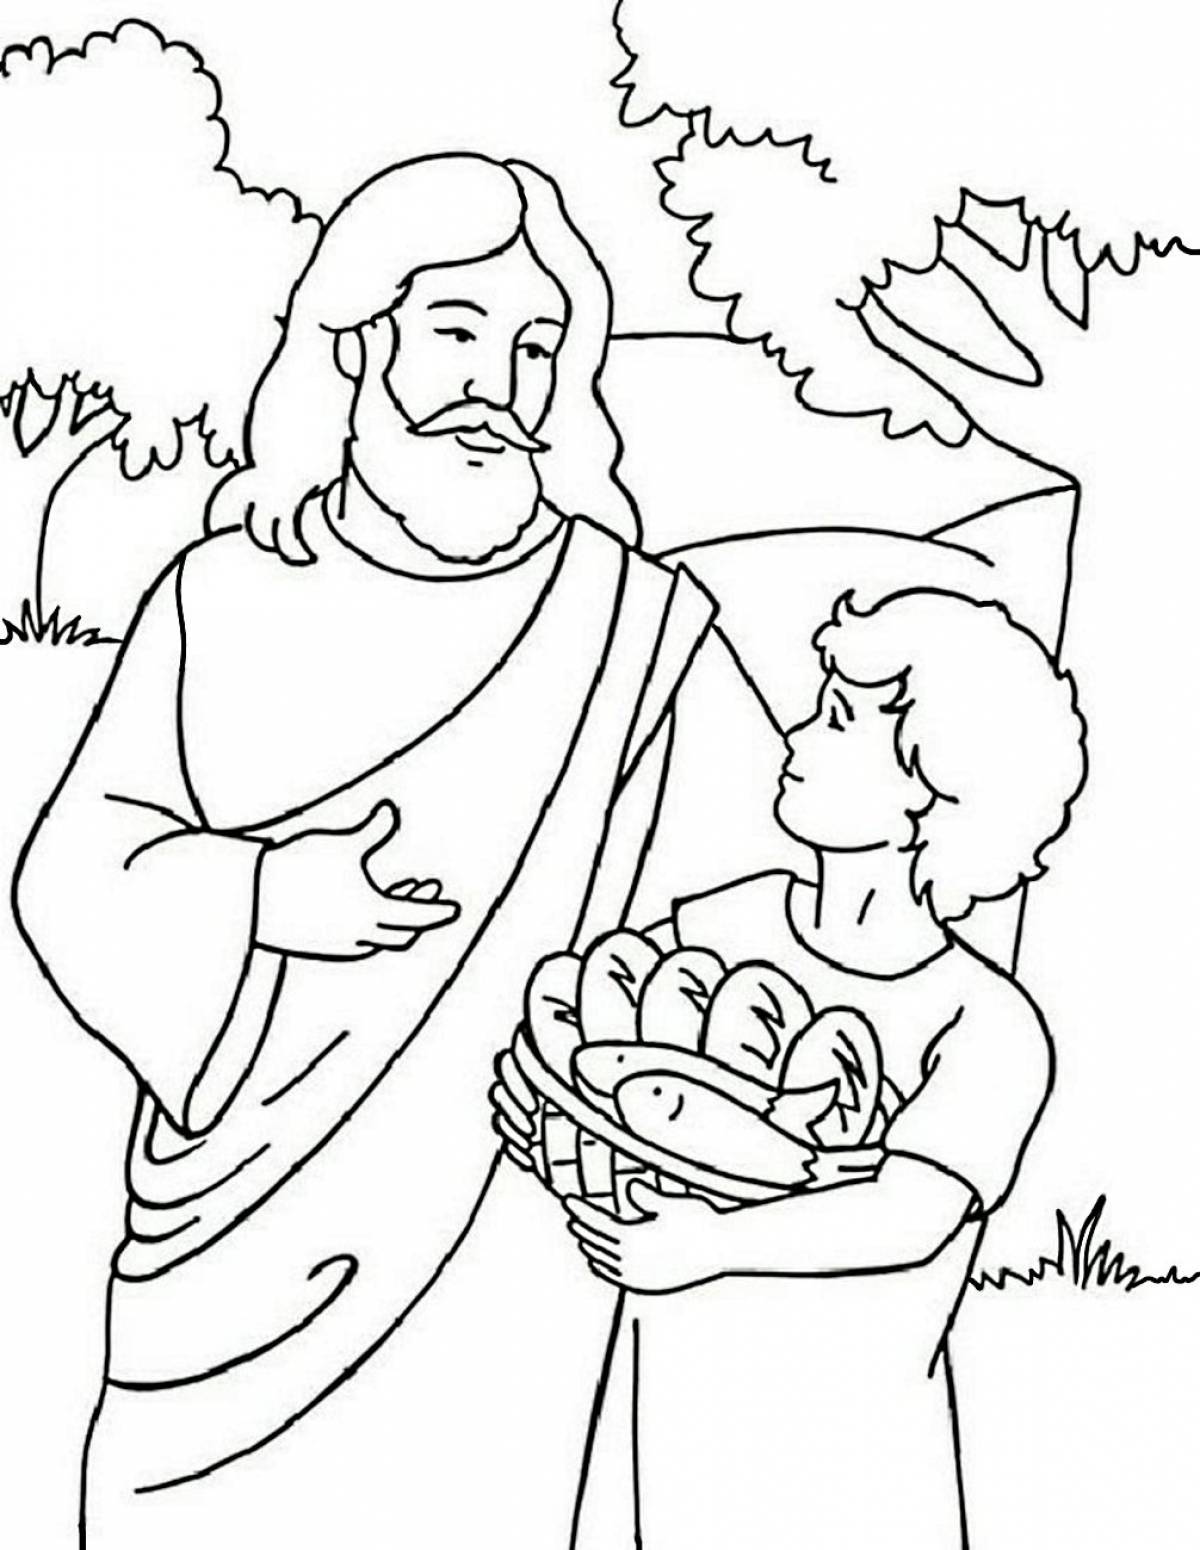 Christian for kids fun coloring book